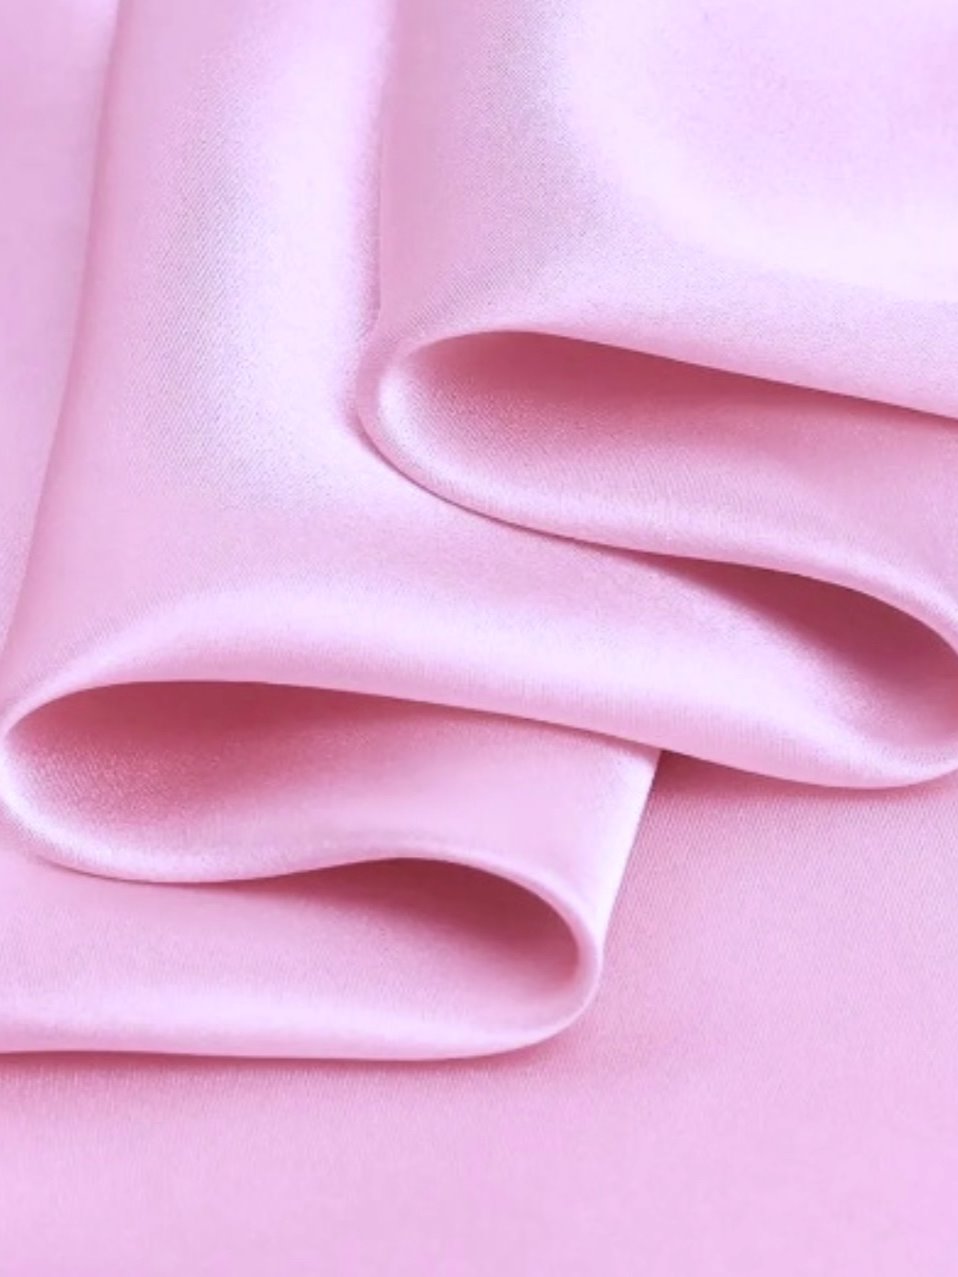 Light Baby Pink Fine Silky Smooth Liquid Sateen Satin Dress Fabric